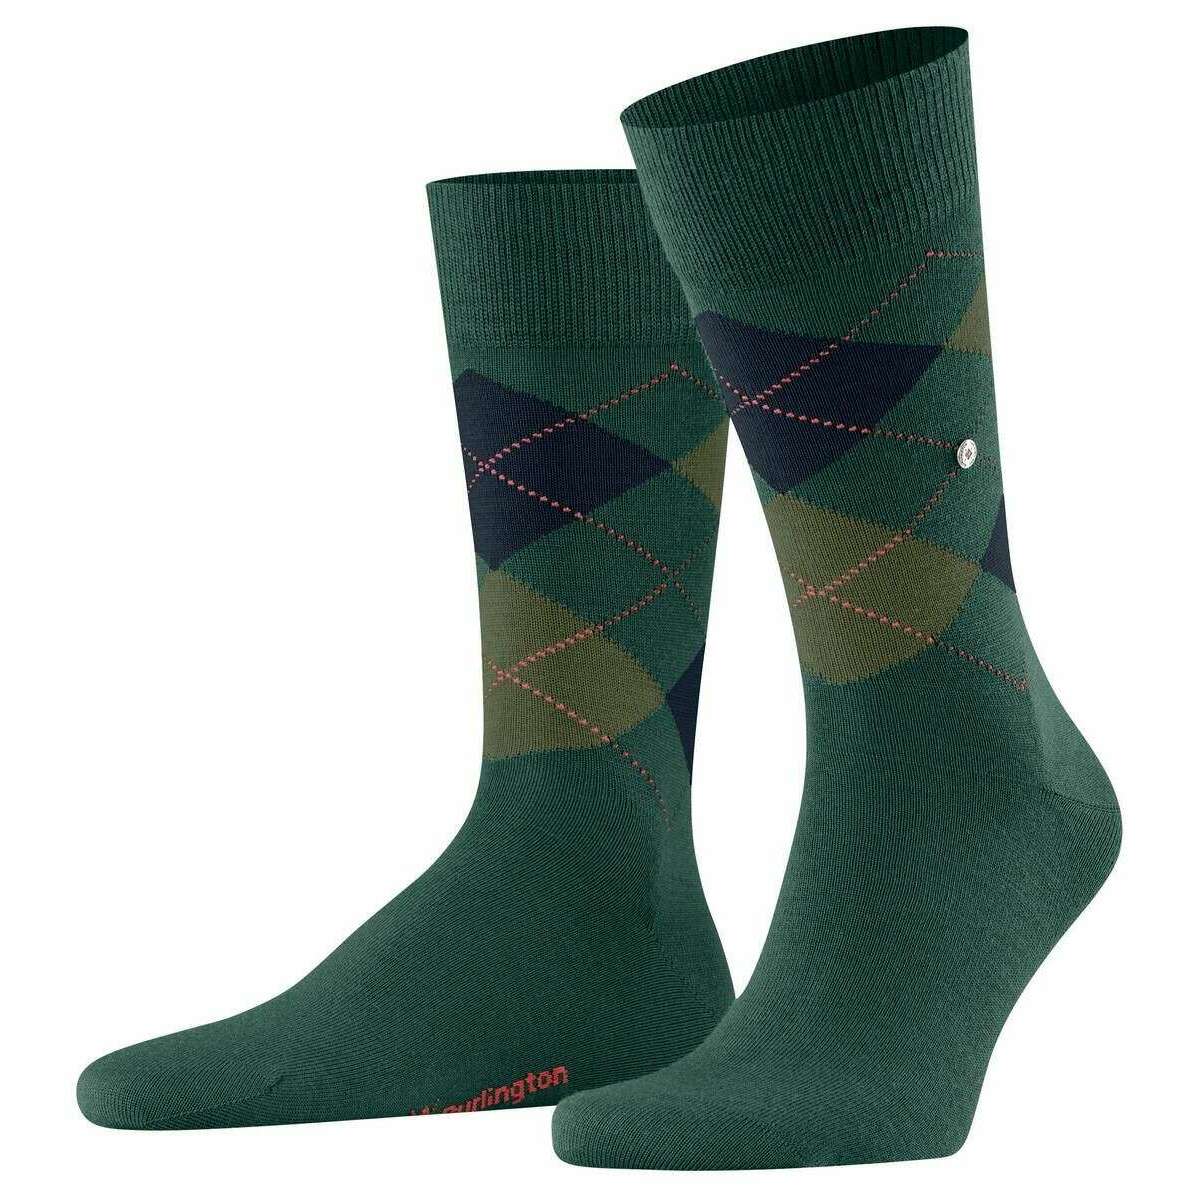 Burlington Edinburgh Socks - Deep Teal Green